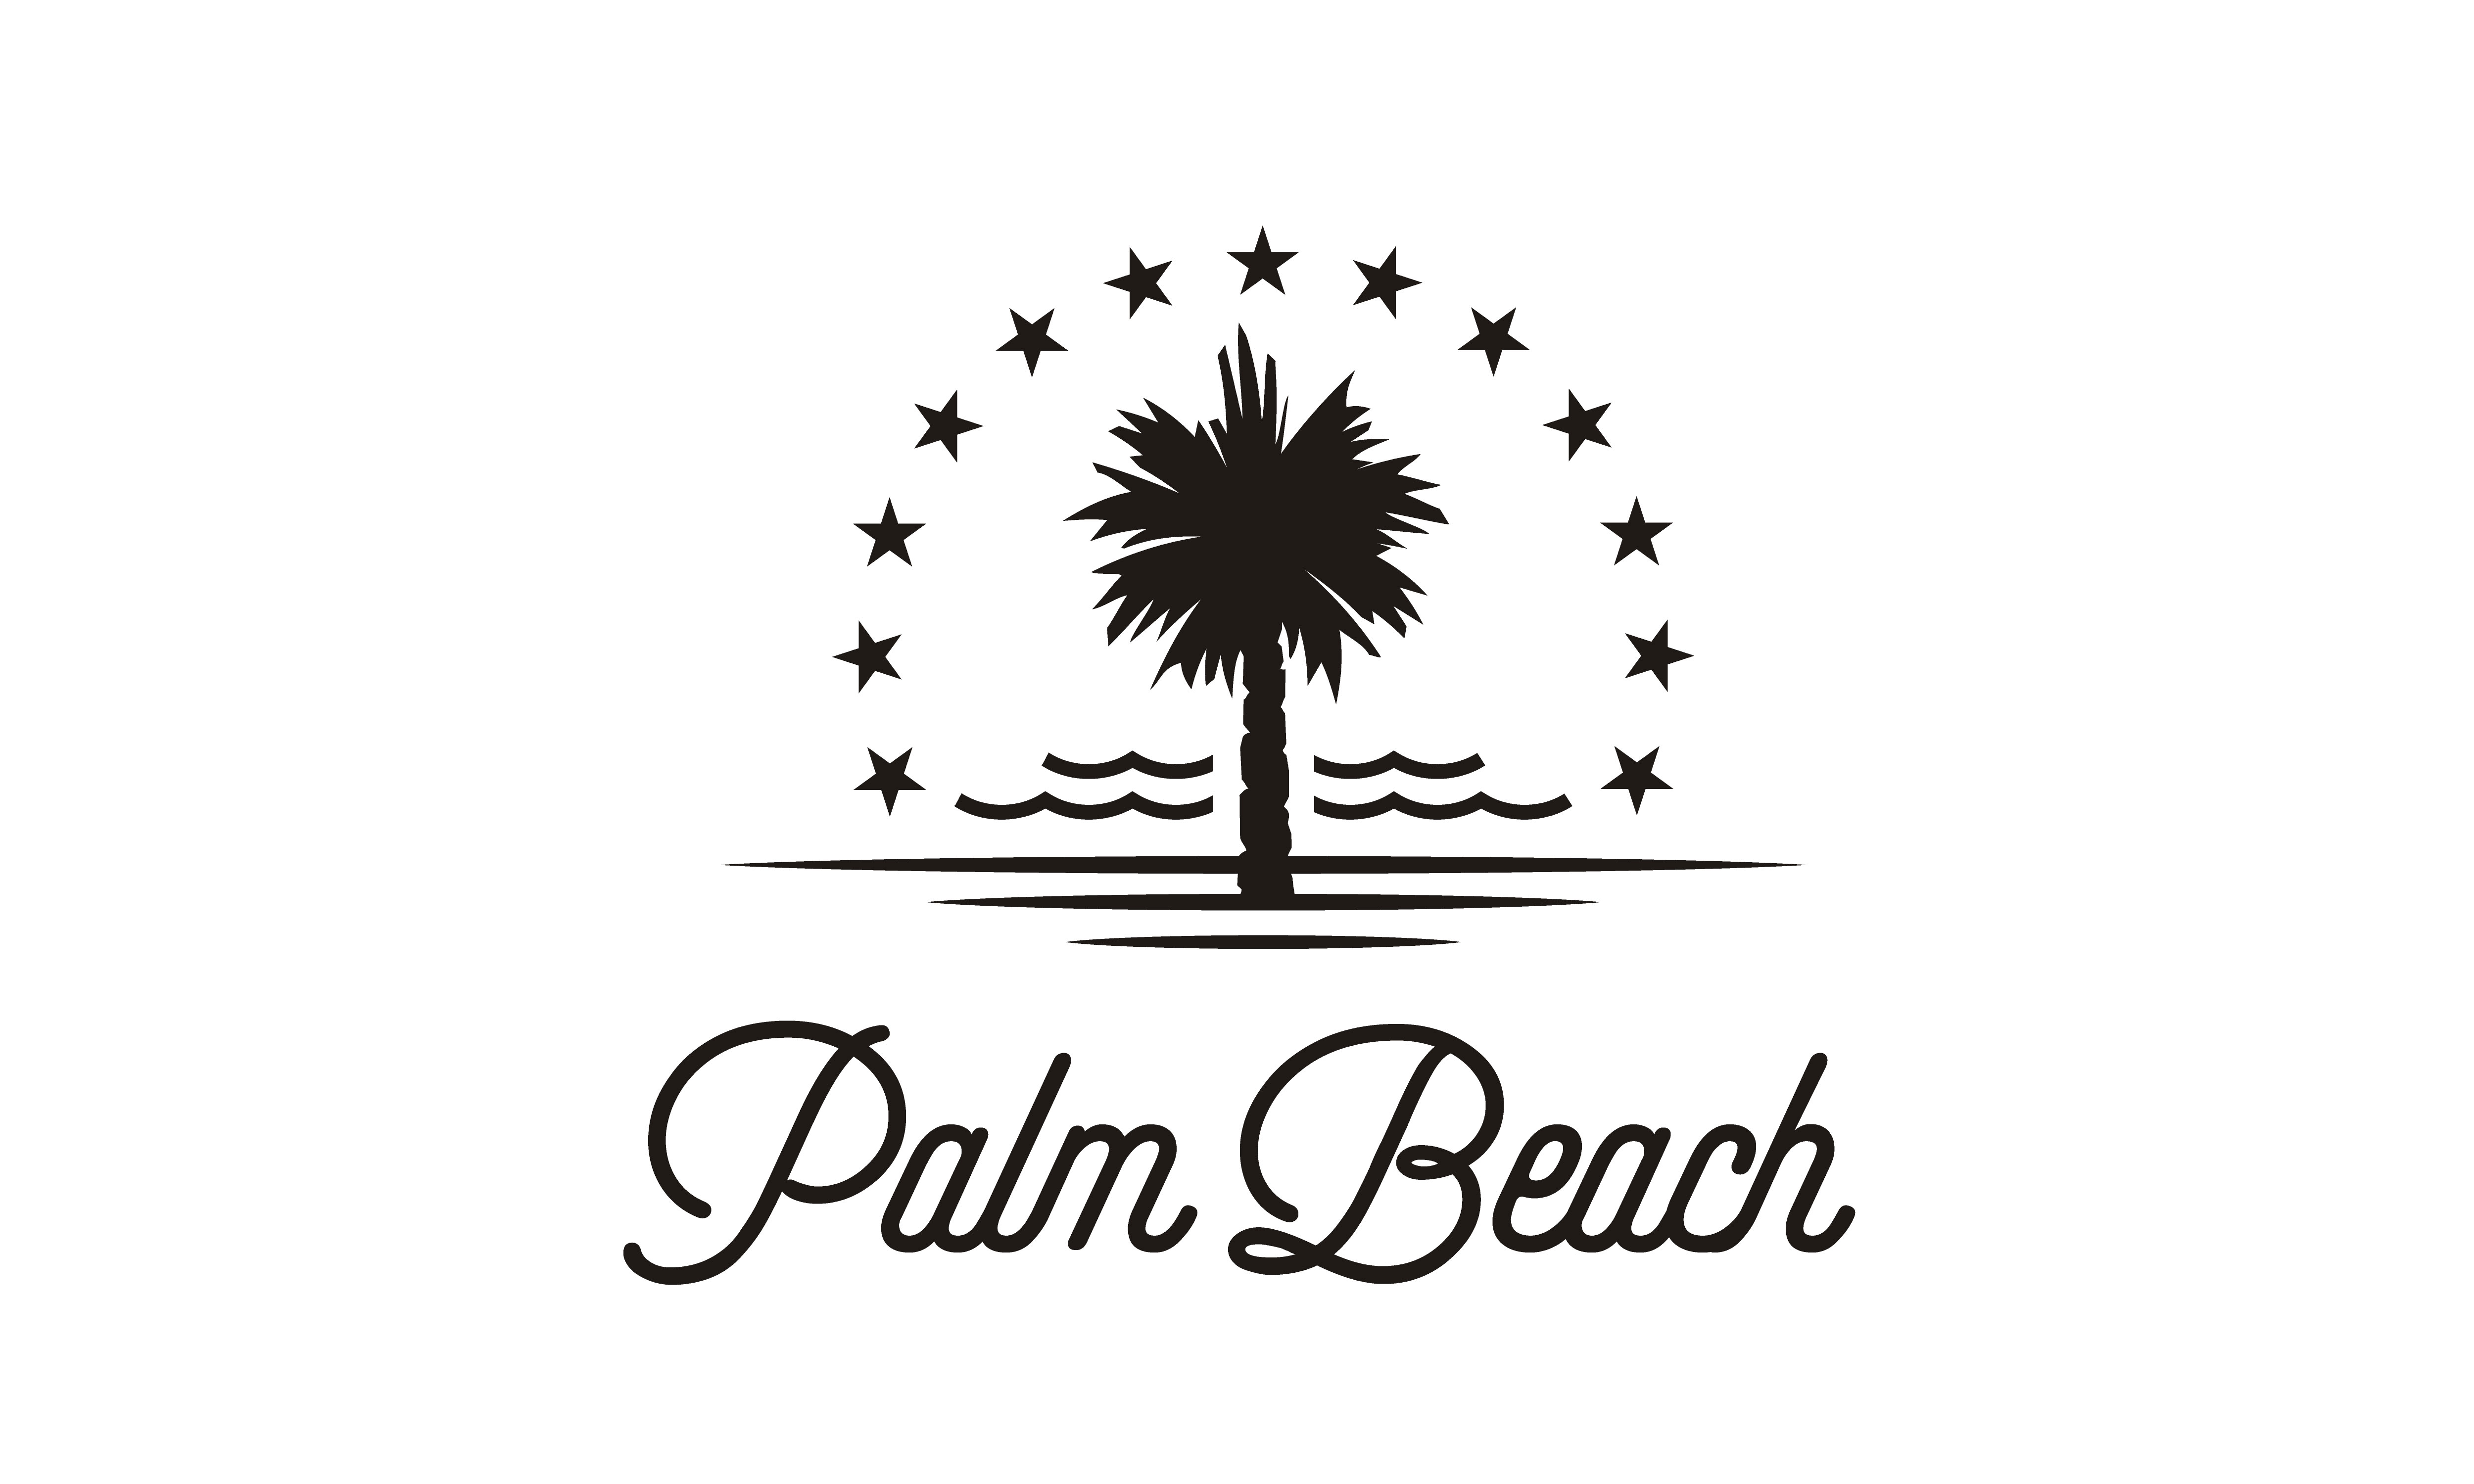 restaurant logos palm tree